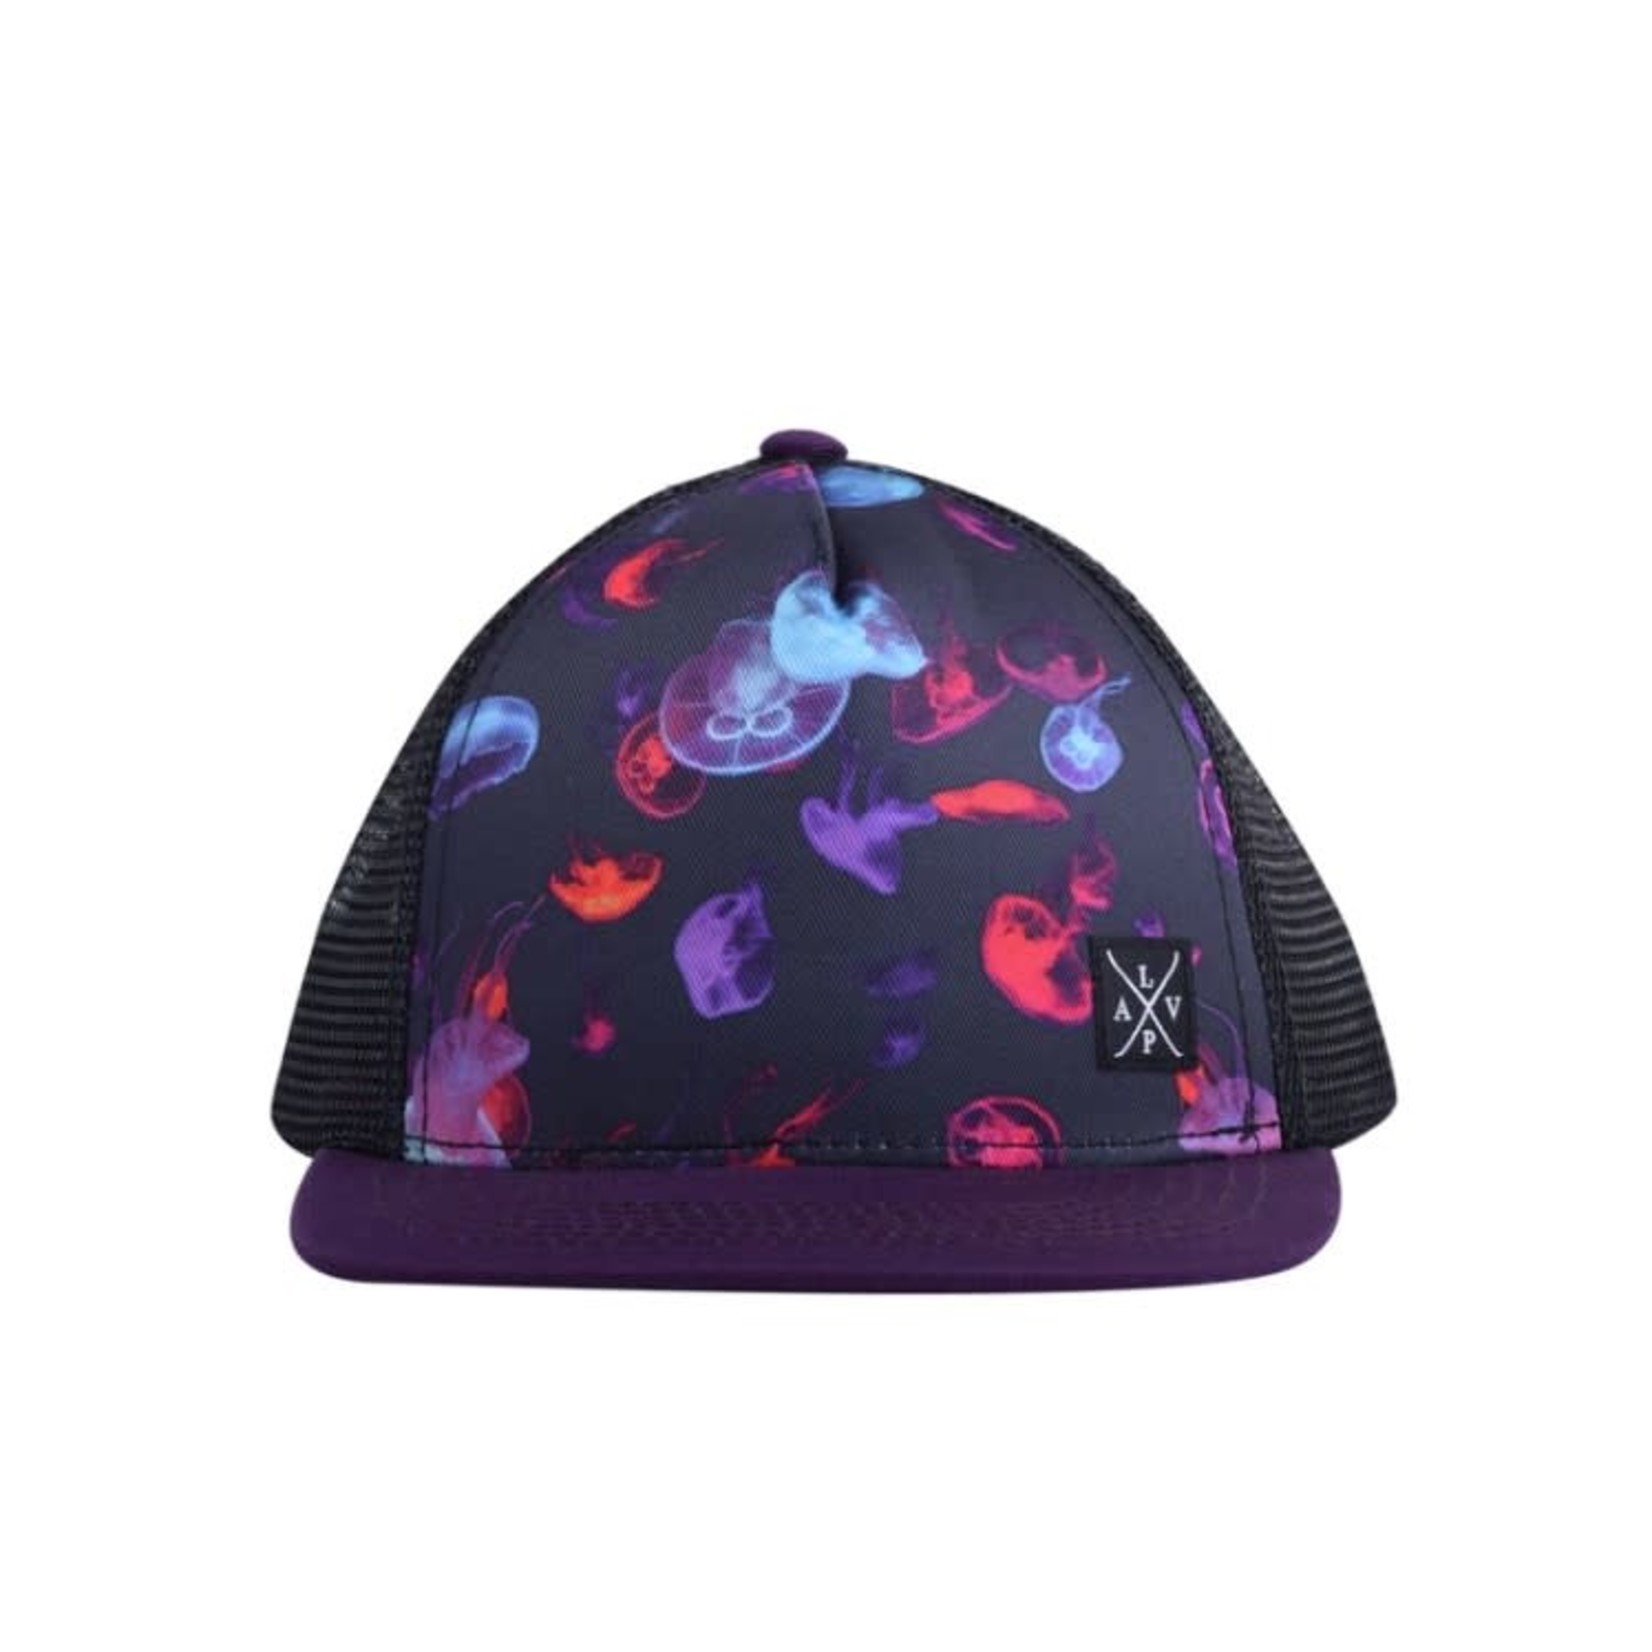 L&P L&P - Cap with mesh'Snapback - Jellyfish' - purple peak